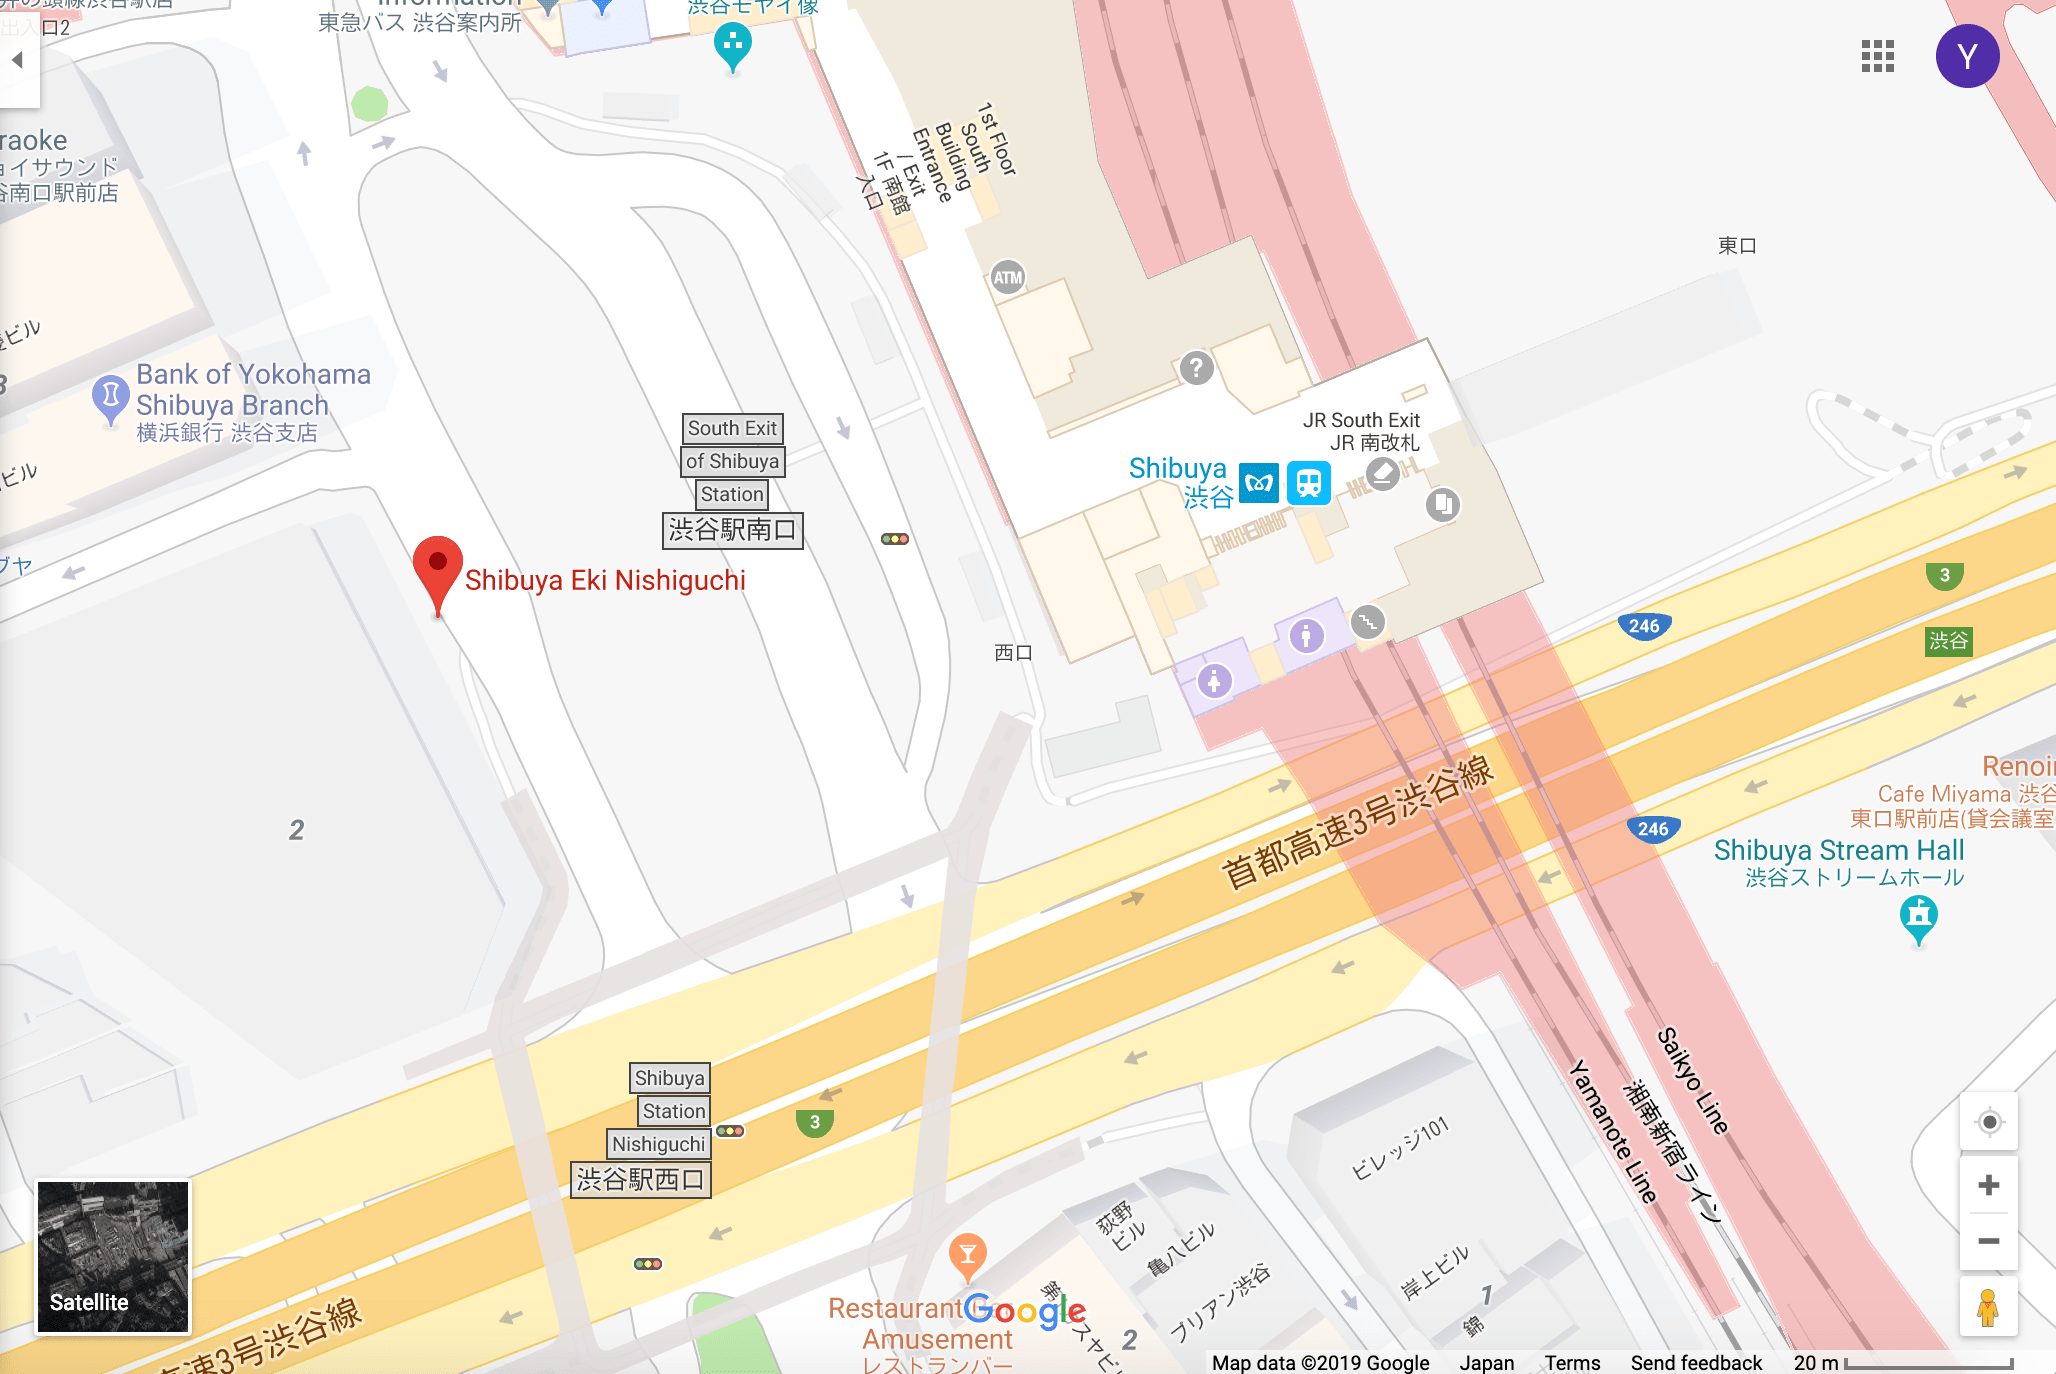 Google Highlights Street